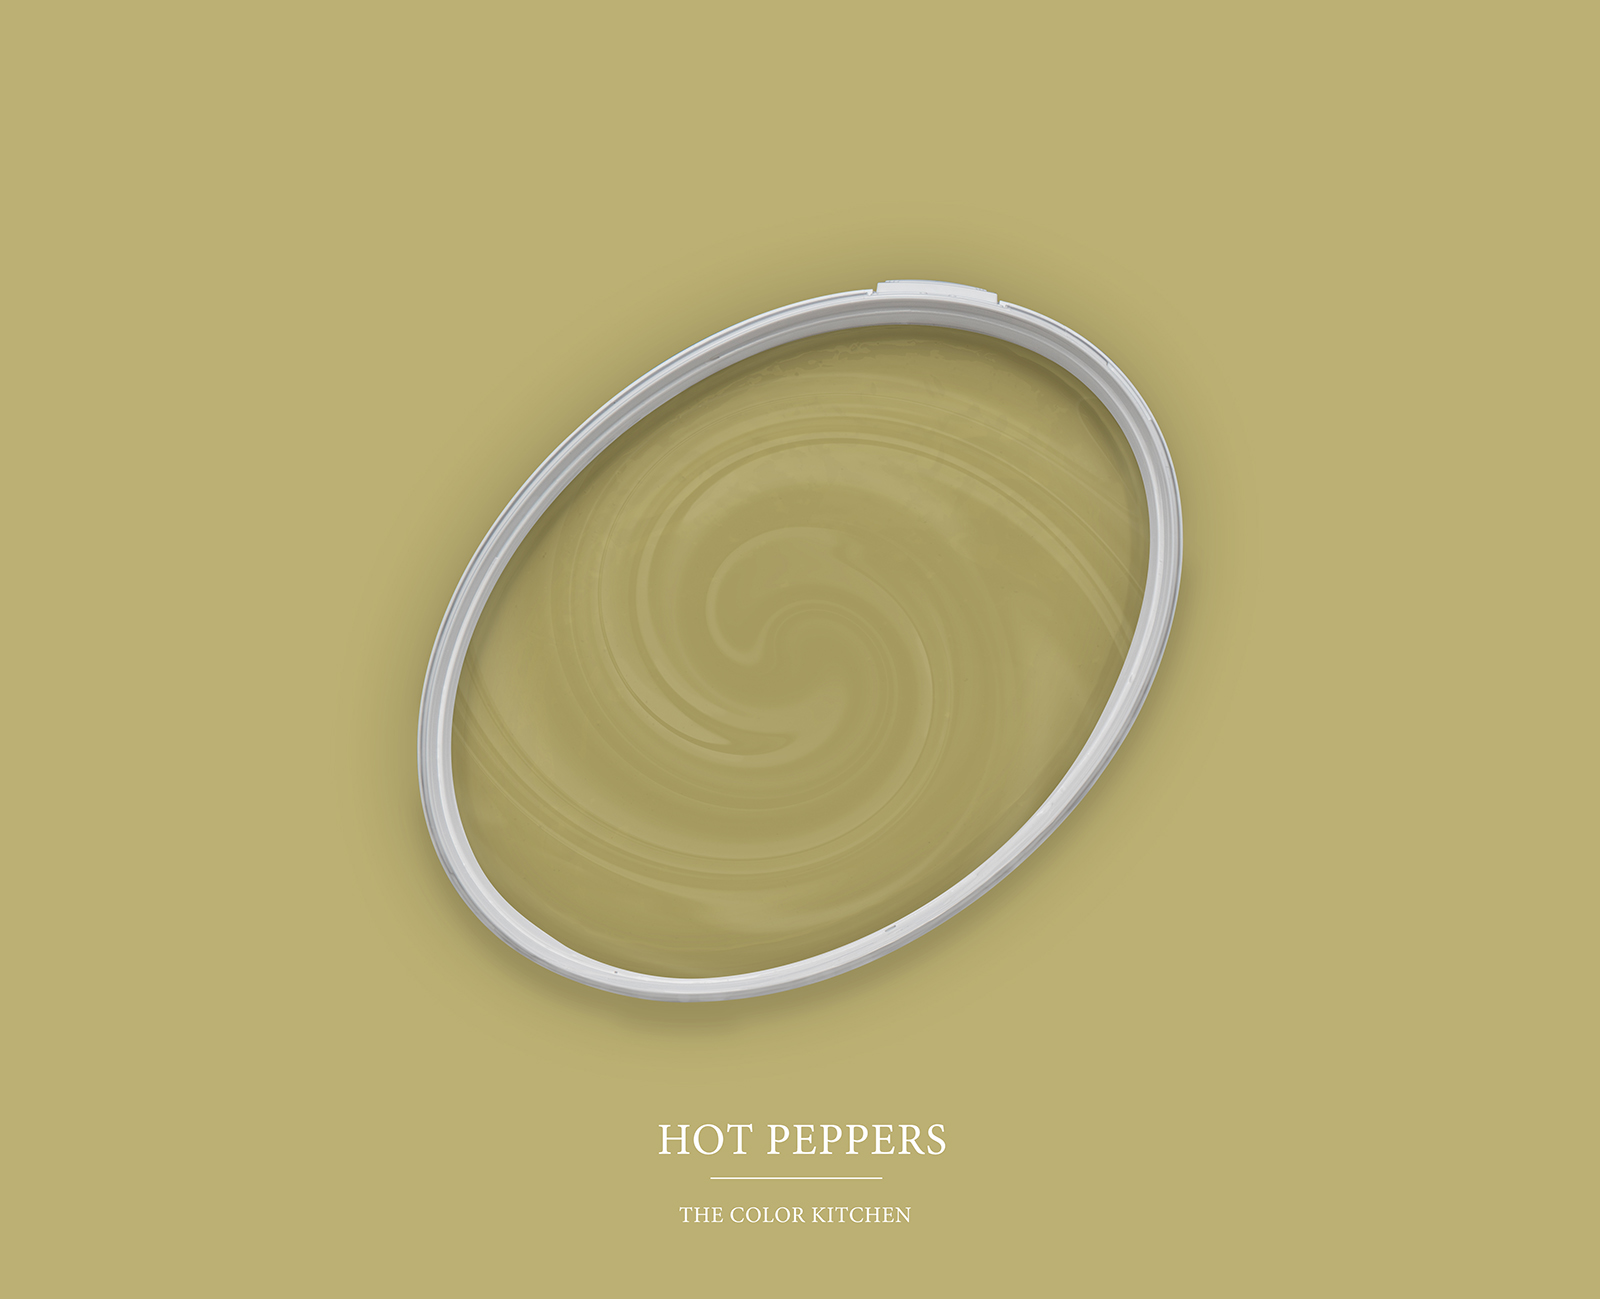 Wandfarbe in entspannendem Grün »Hot Peppers« TCK4011 – 5 Liter
